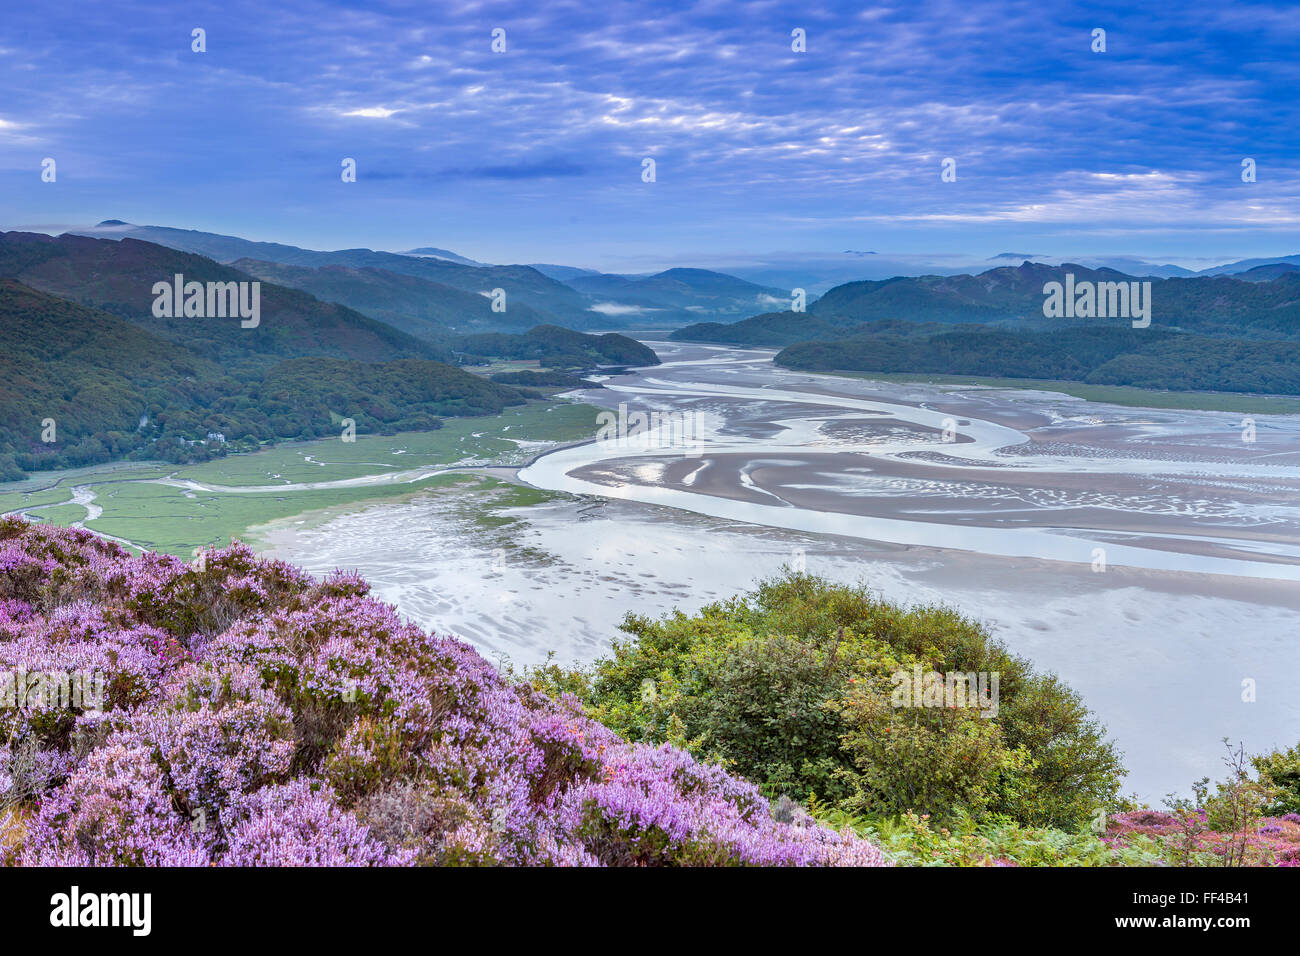 Mawddach Estuary visto dal Panorama a piedi sopra Barmouth, Gwynedd, Wales, Regno Unito, Europa. Foto Stock